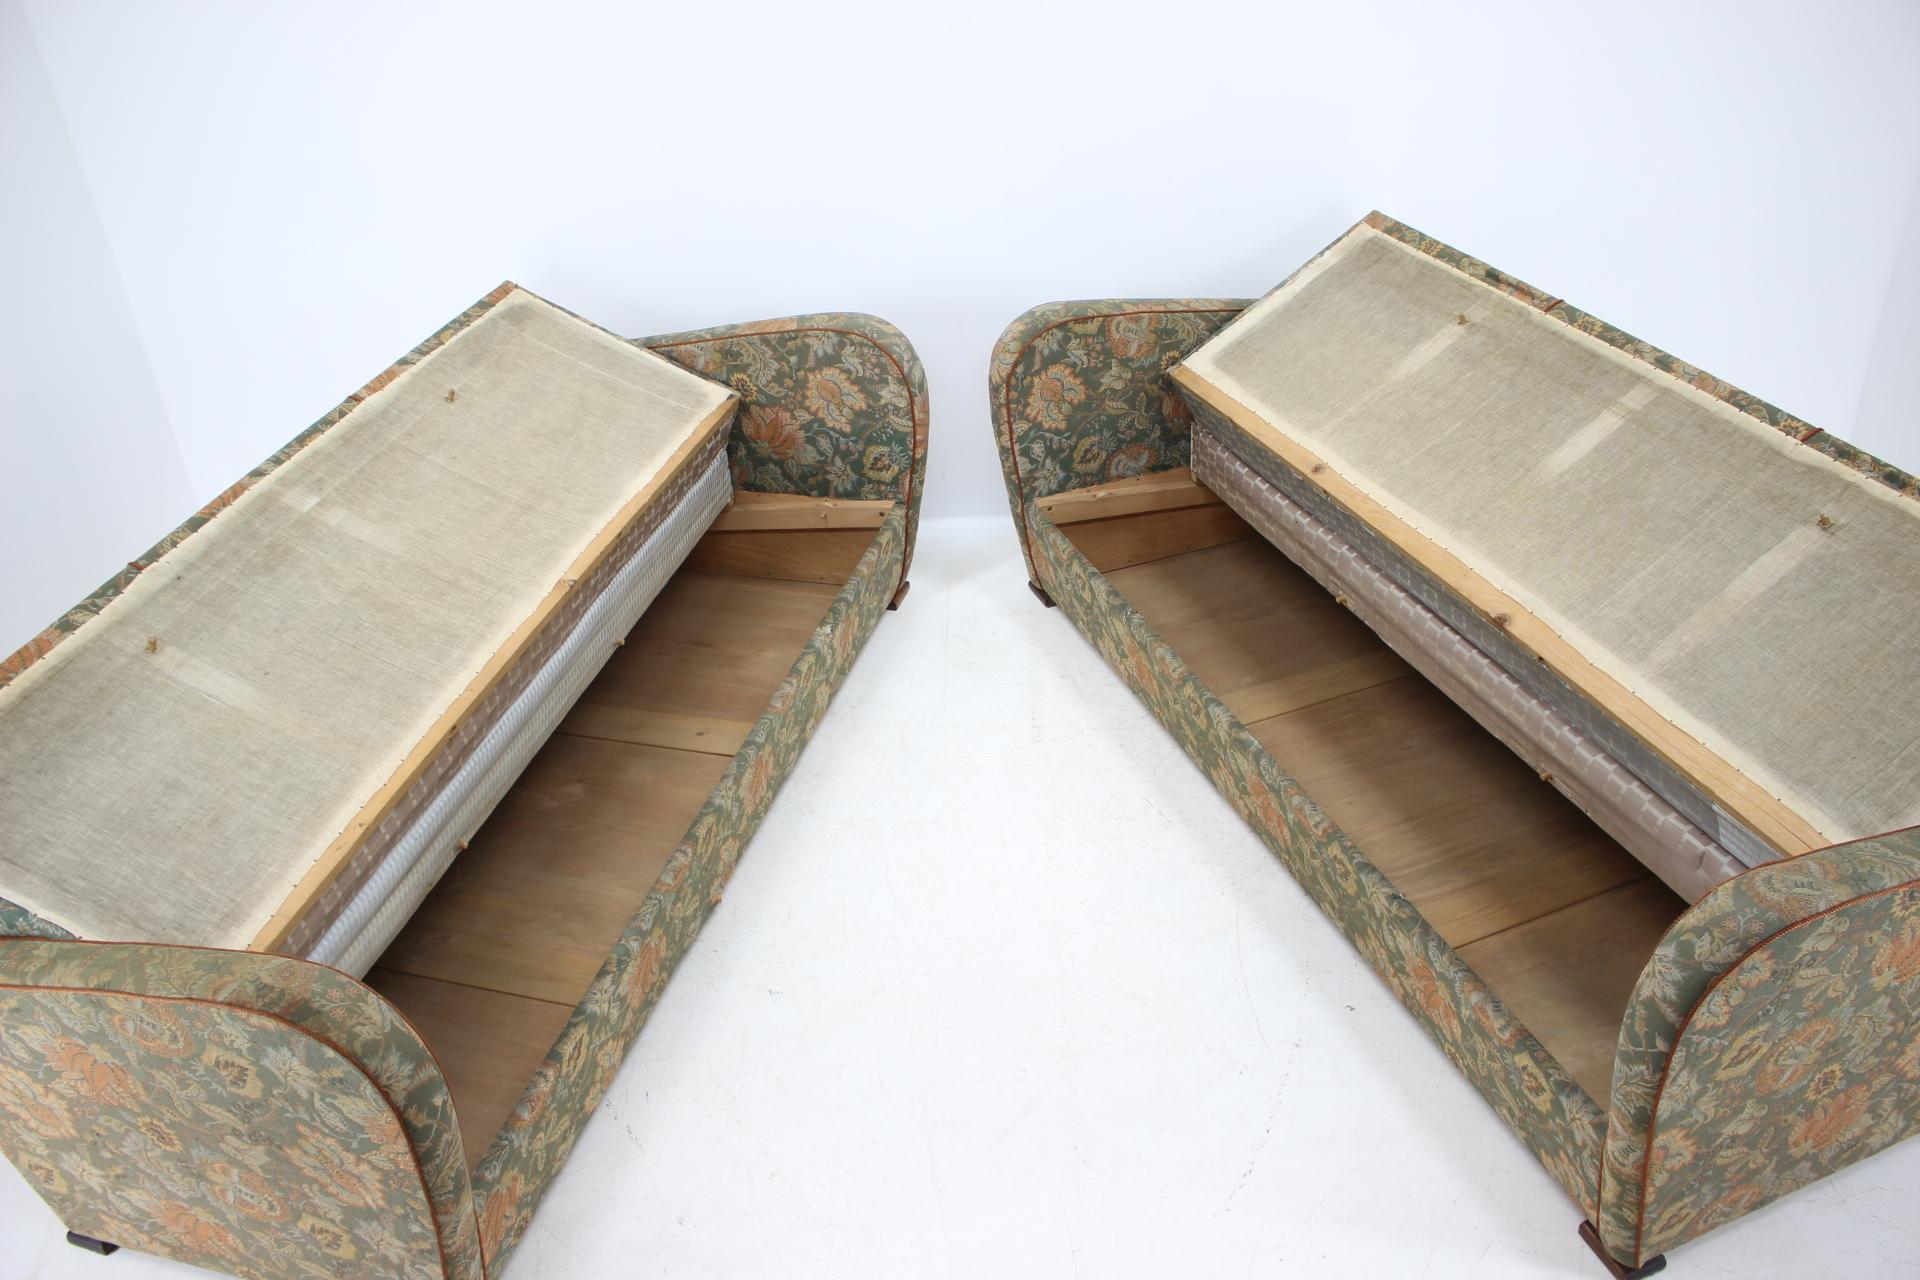 - Made in Czechoslovakia
- Made of wood, fabric
- Original upholstery
- Measures: Extending depth 105 cm
- Good, original condition.